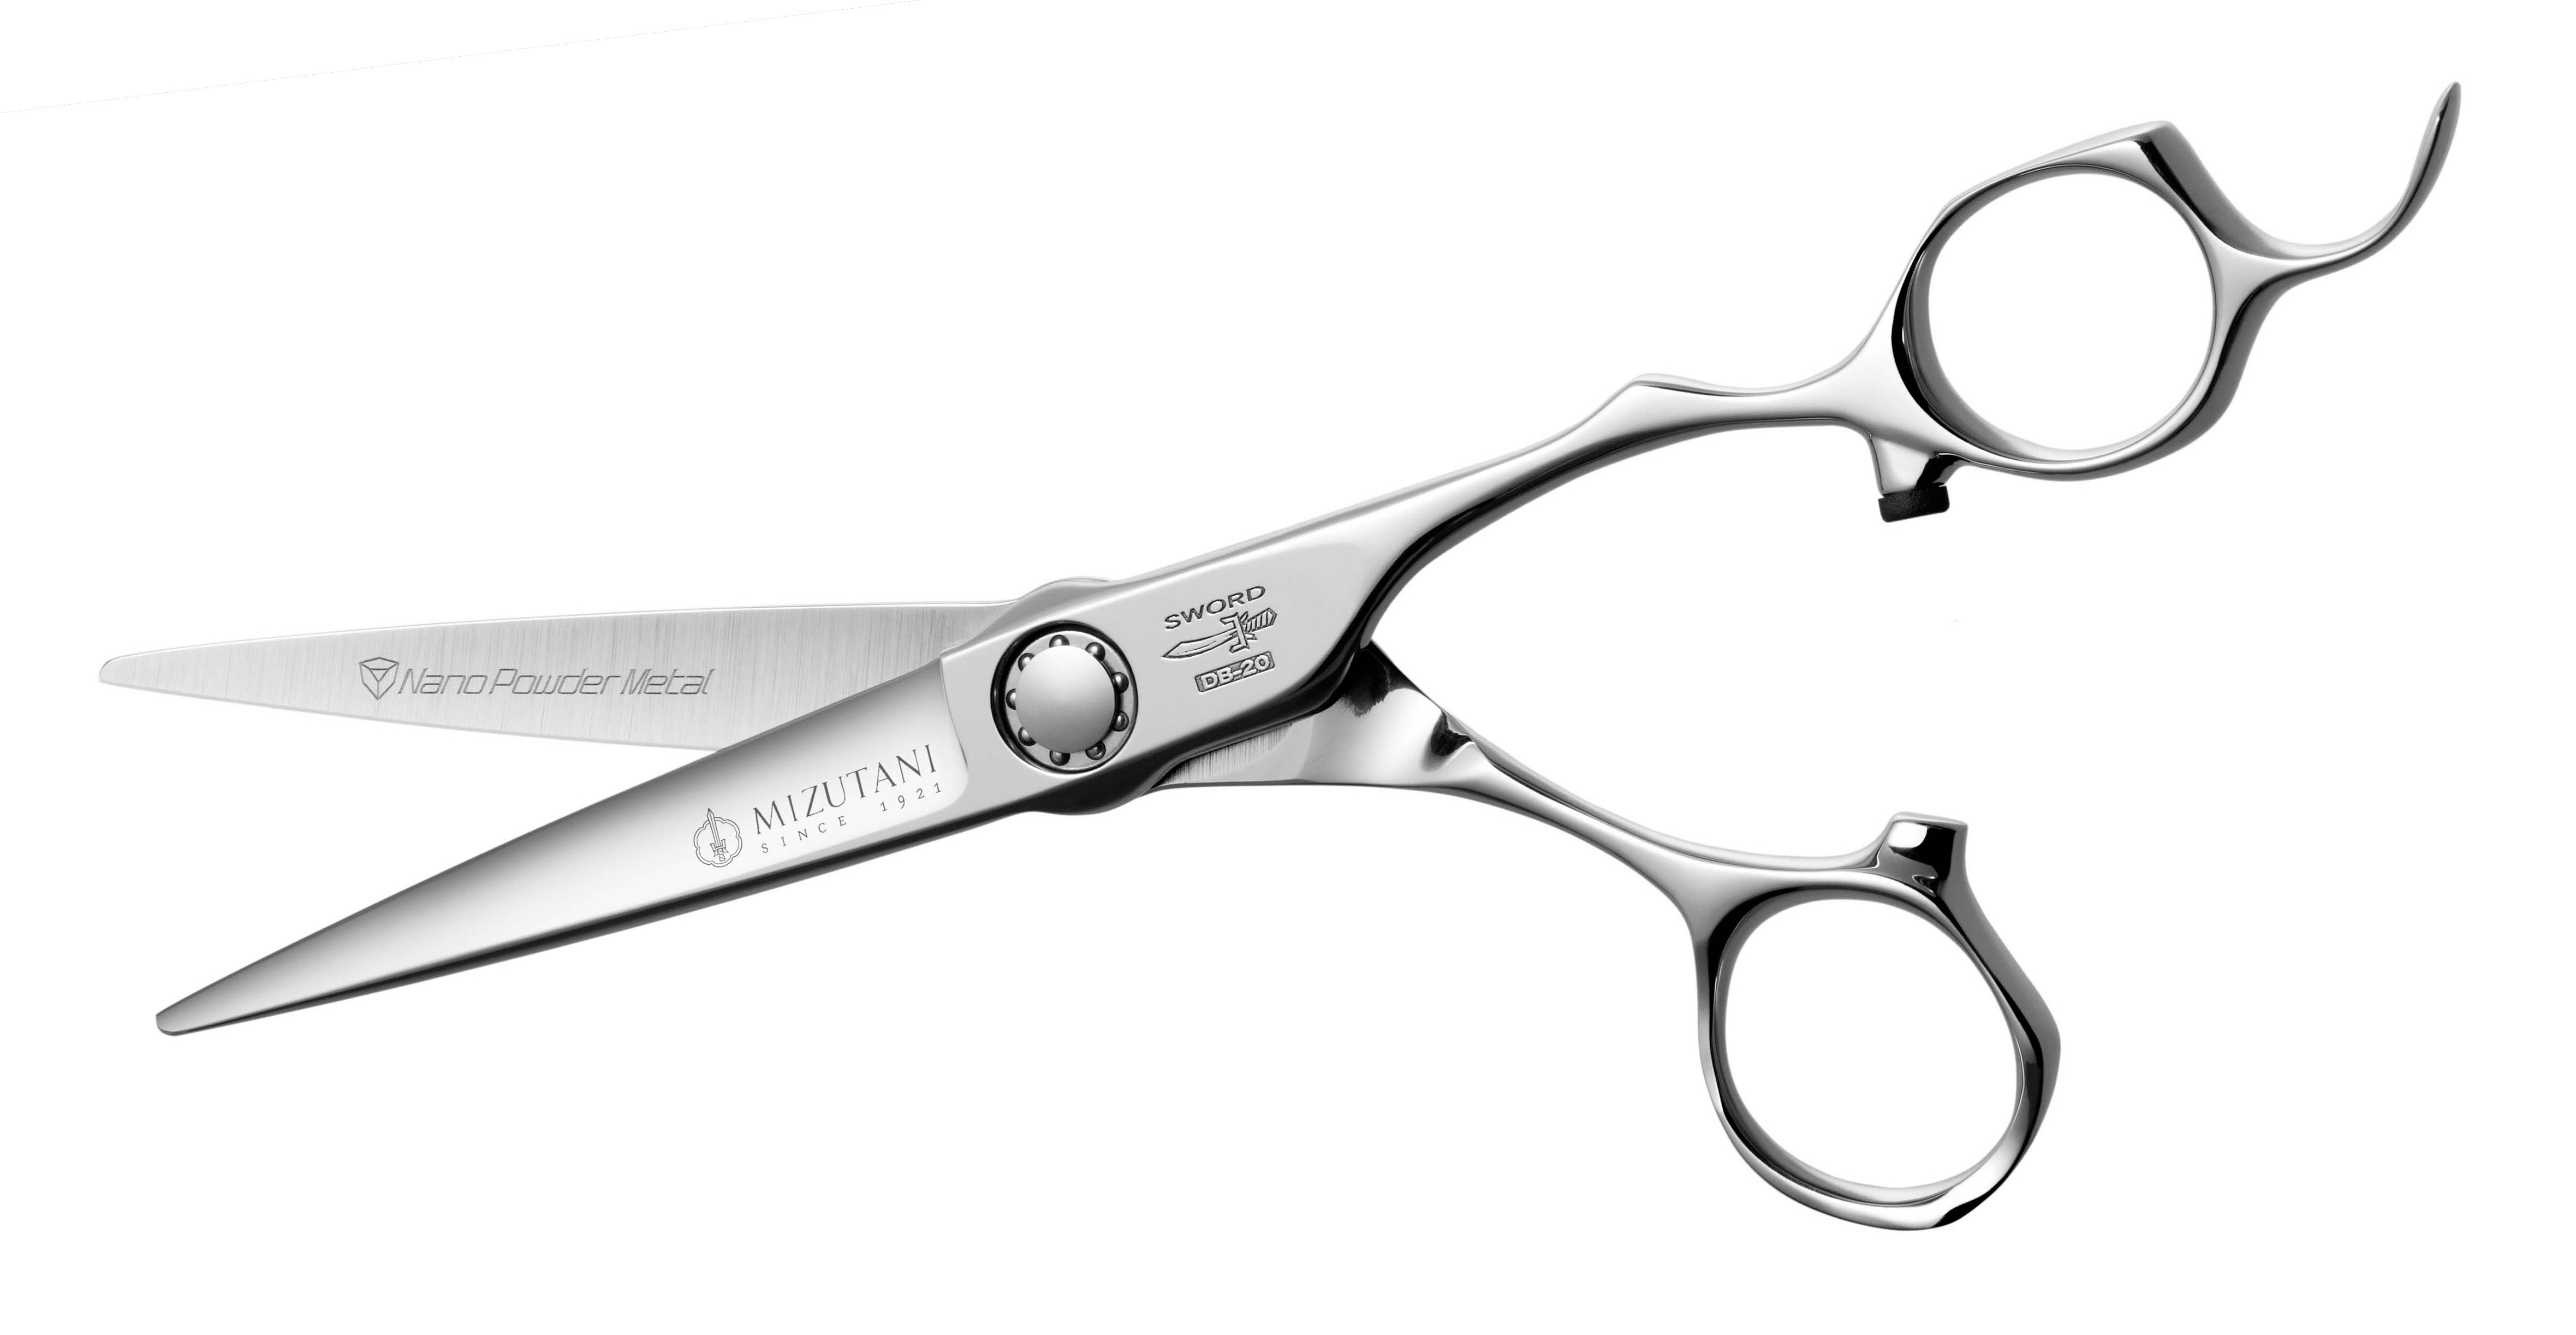 types of hair cutting scissors